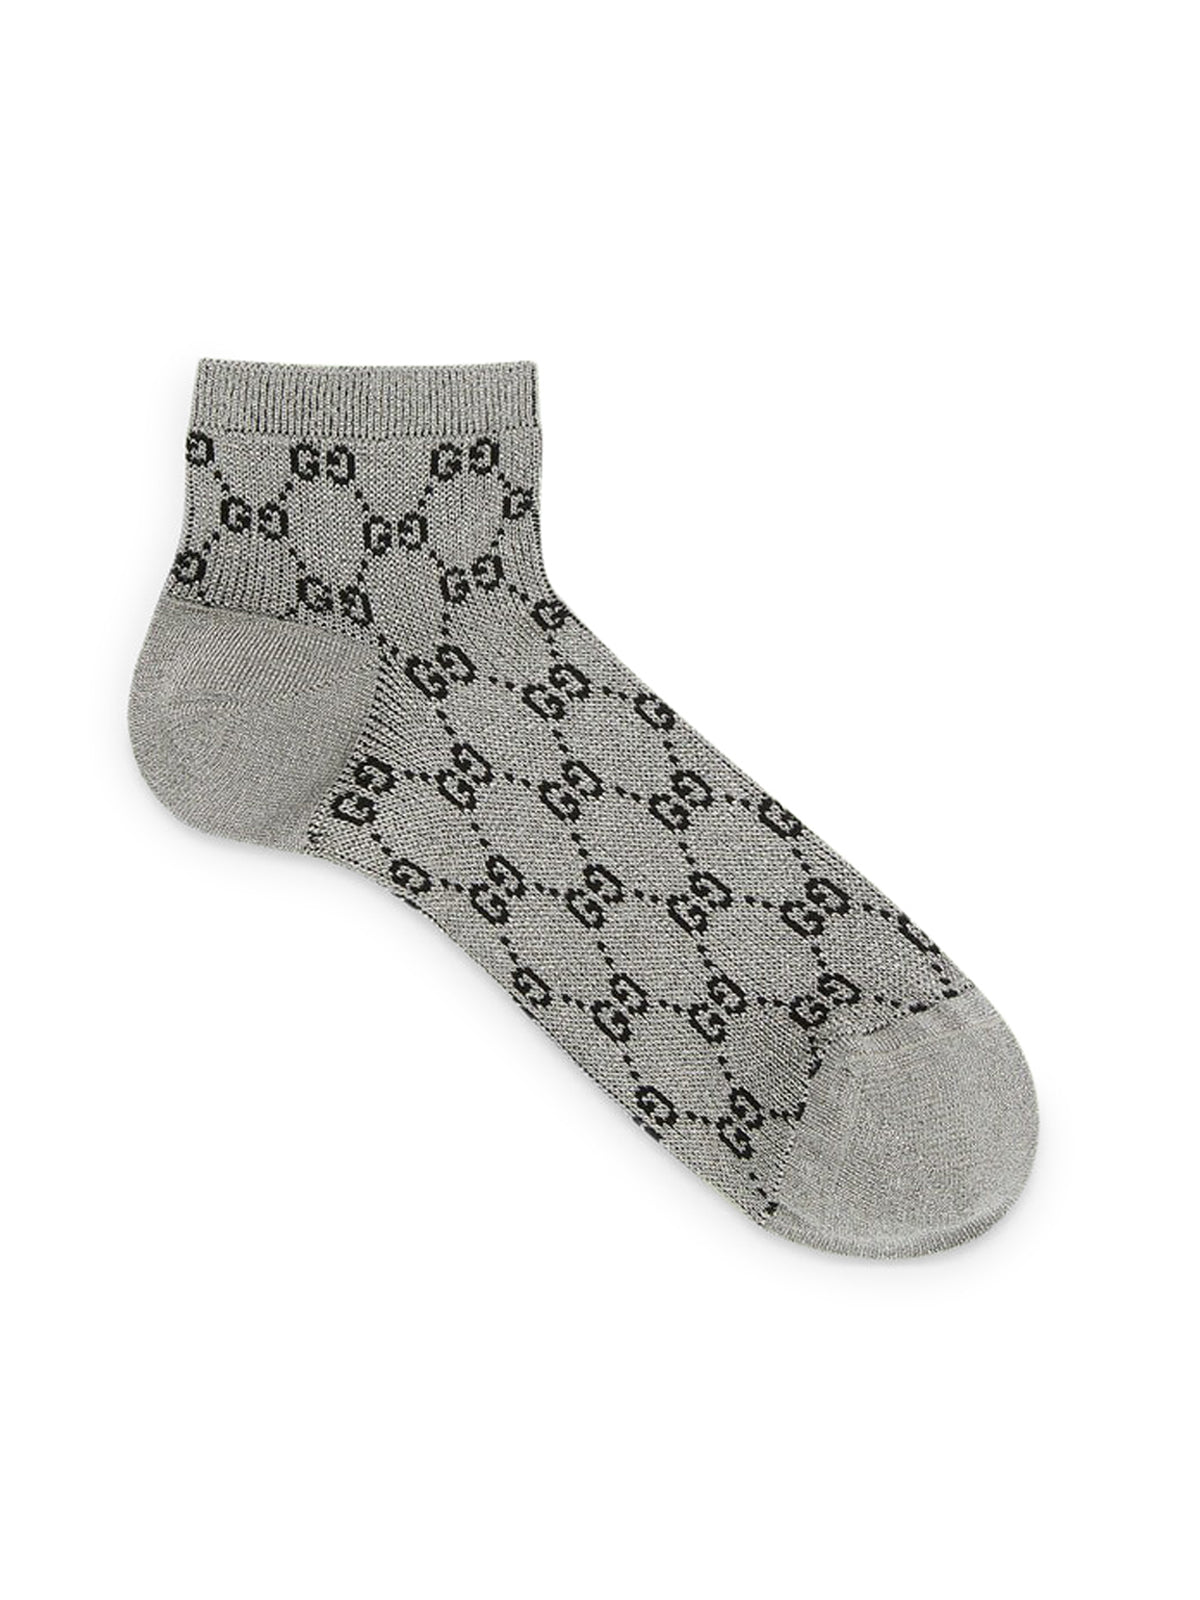 GG lamé fabric socks